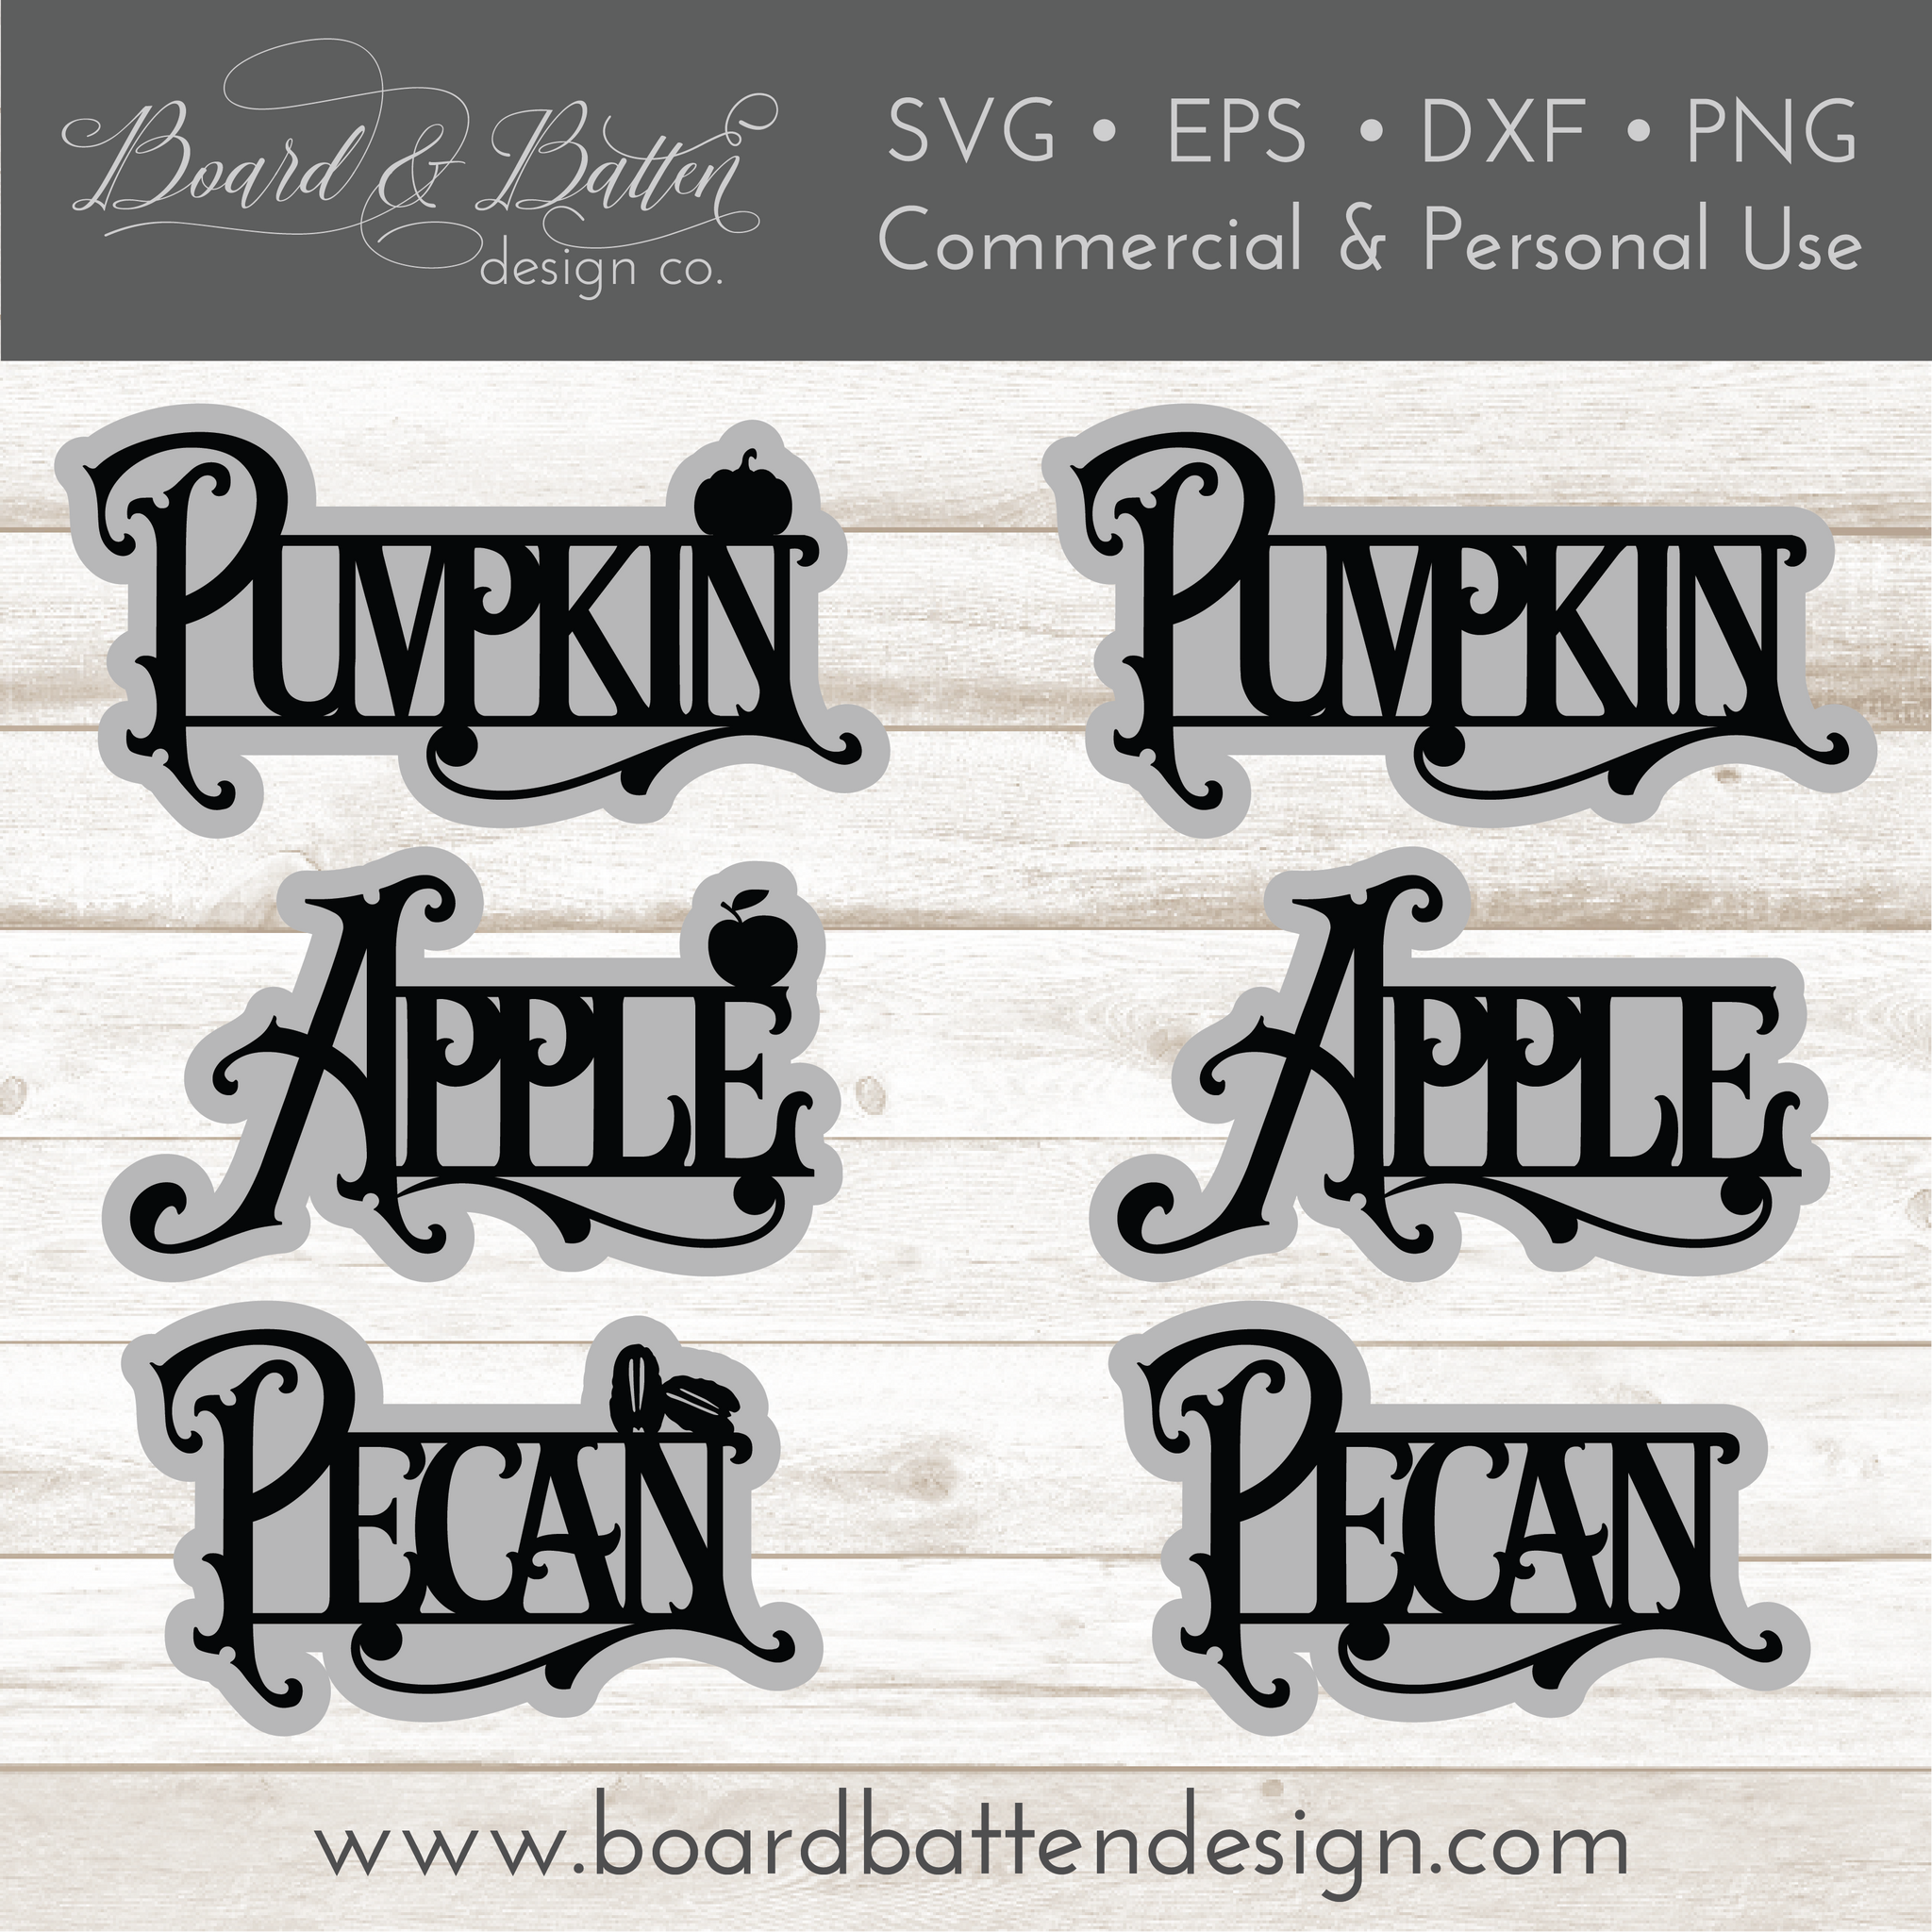 Thanksgiving Pie Topper Svg | Apple, Pumpkin, Pecan Pie Topper Cricut Designs - Commercial Use SVG Files for Cricut & Silhouette